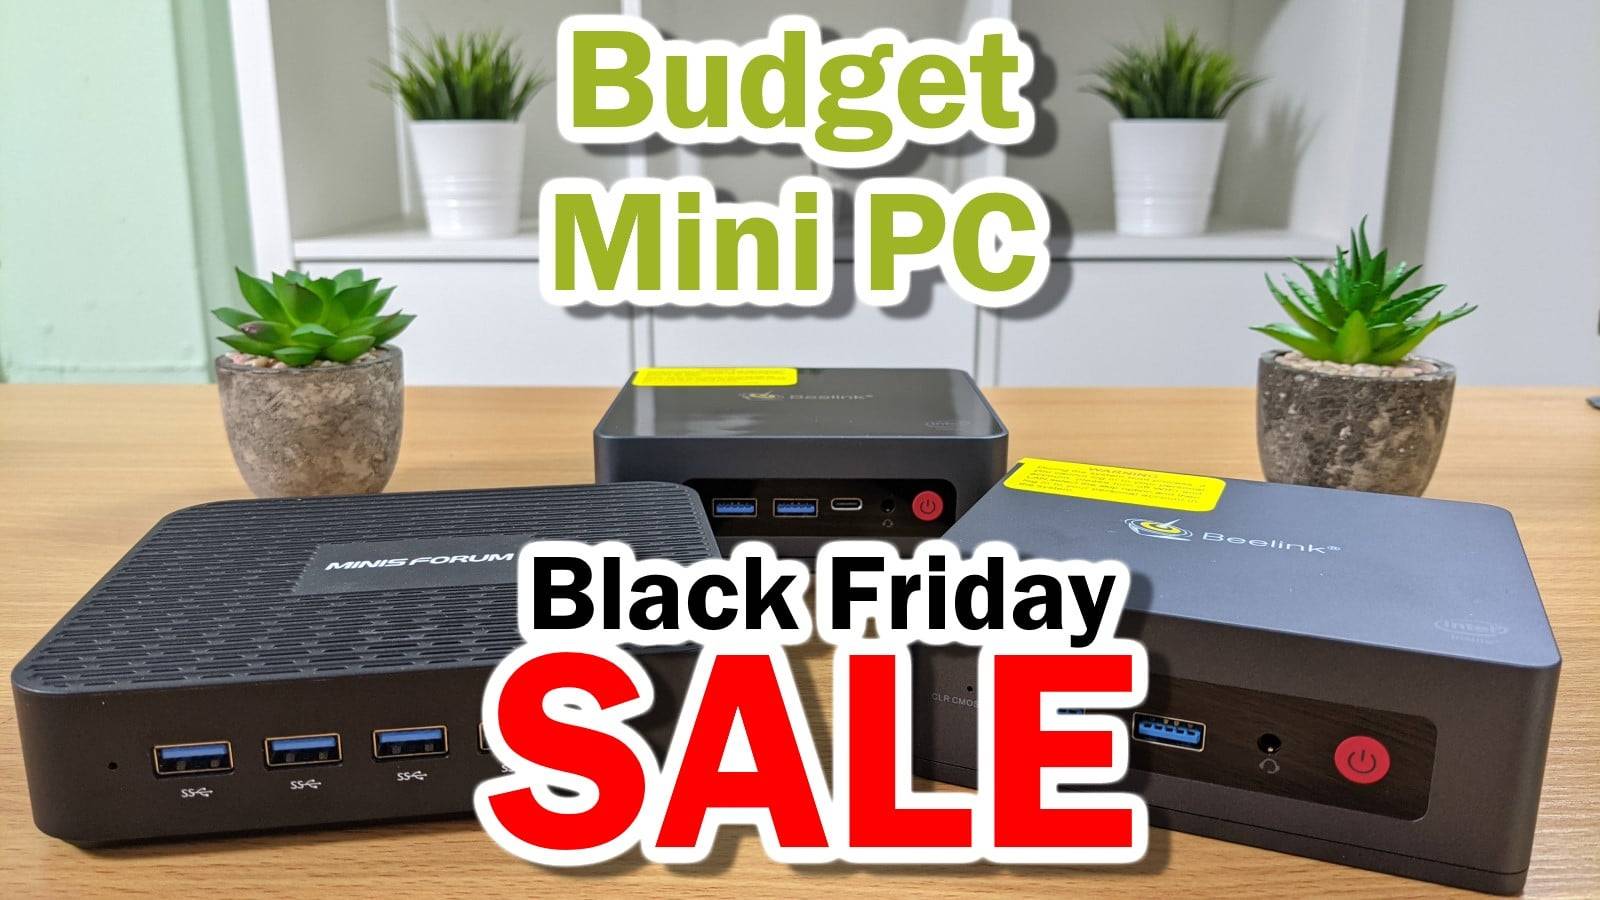 Budget Mini PC Black Friday Sale Banner